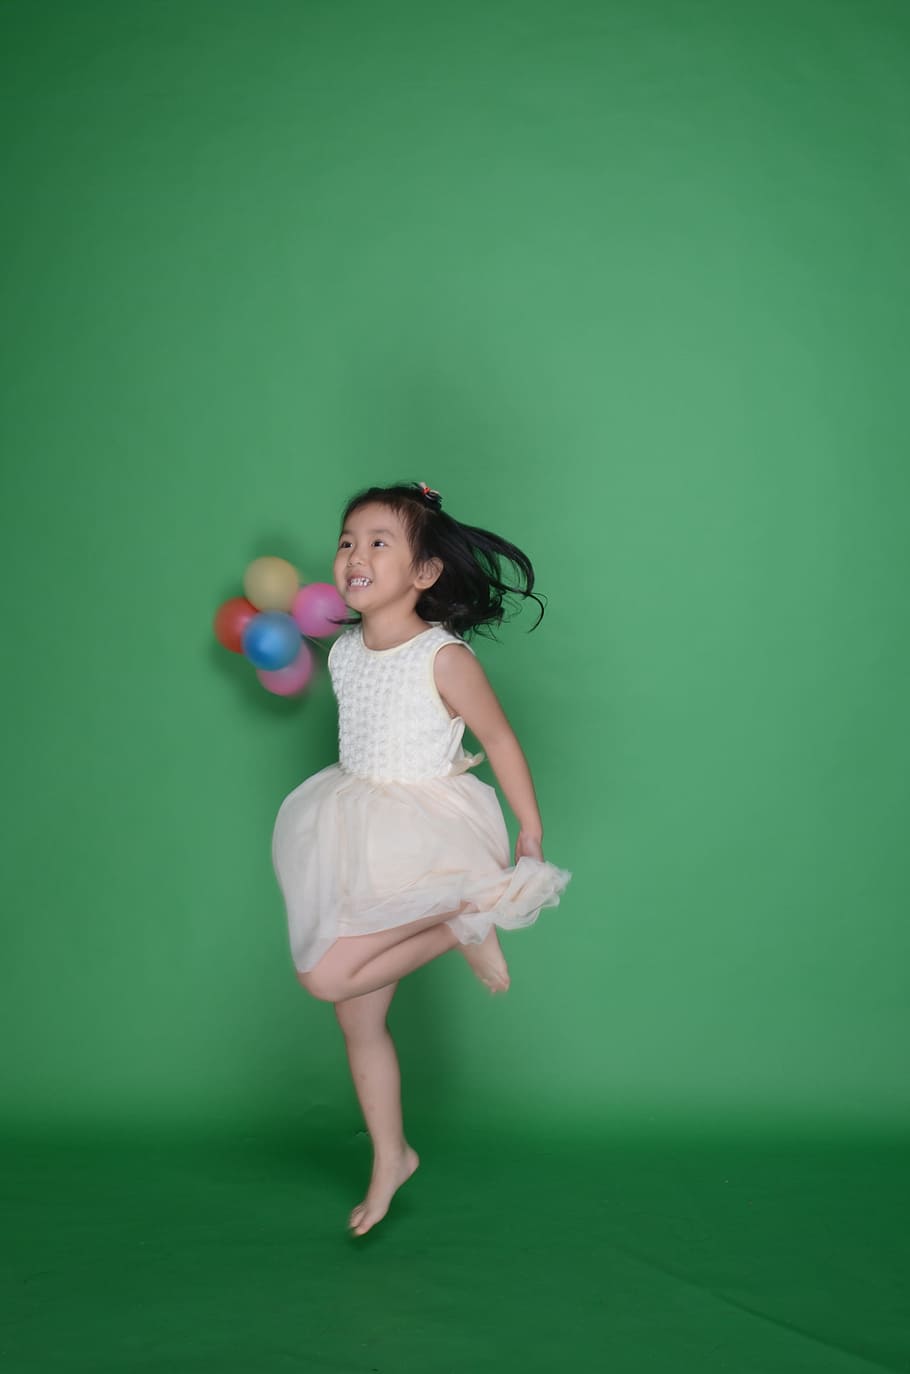 girl, holding, balloons, jumping, green, surface, Balloon, Girls, Cute, Military